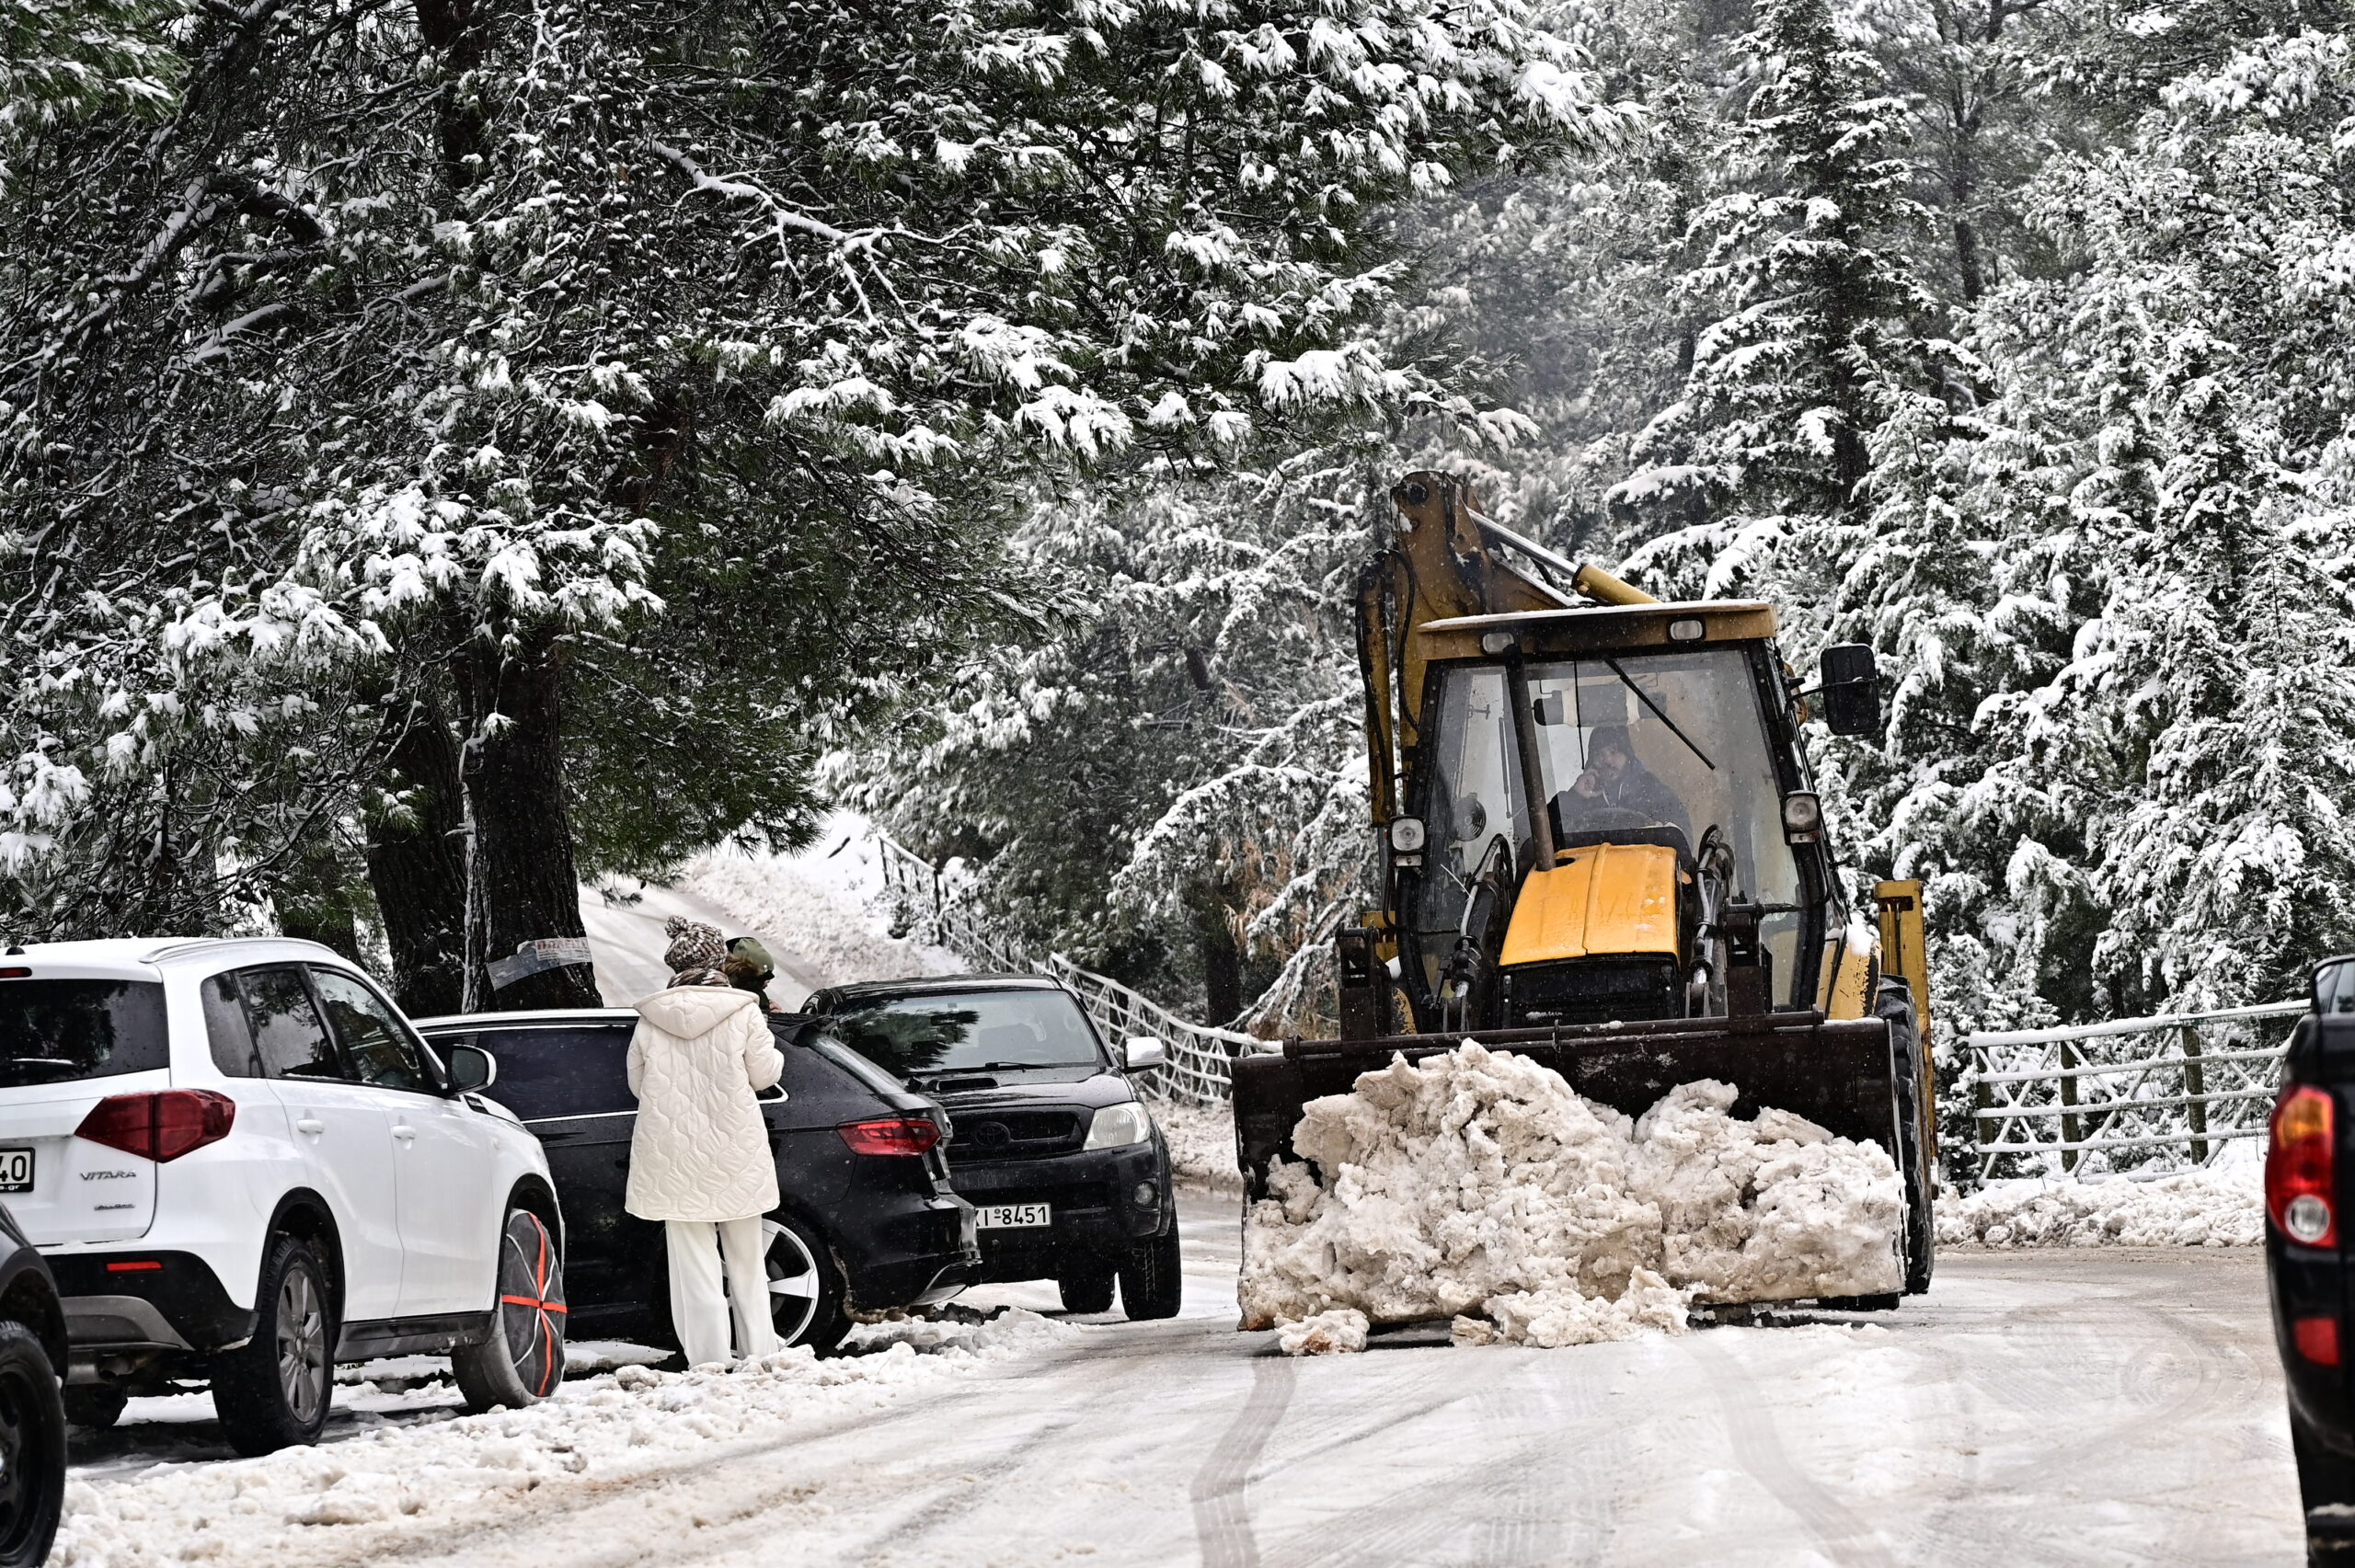 Snow terrain in Attica, Evia and Boeotia – which schools will be closed